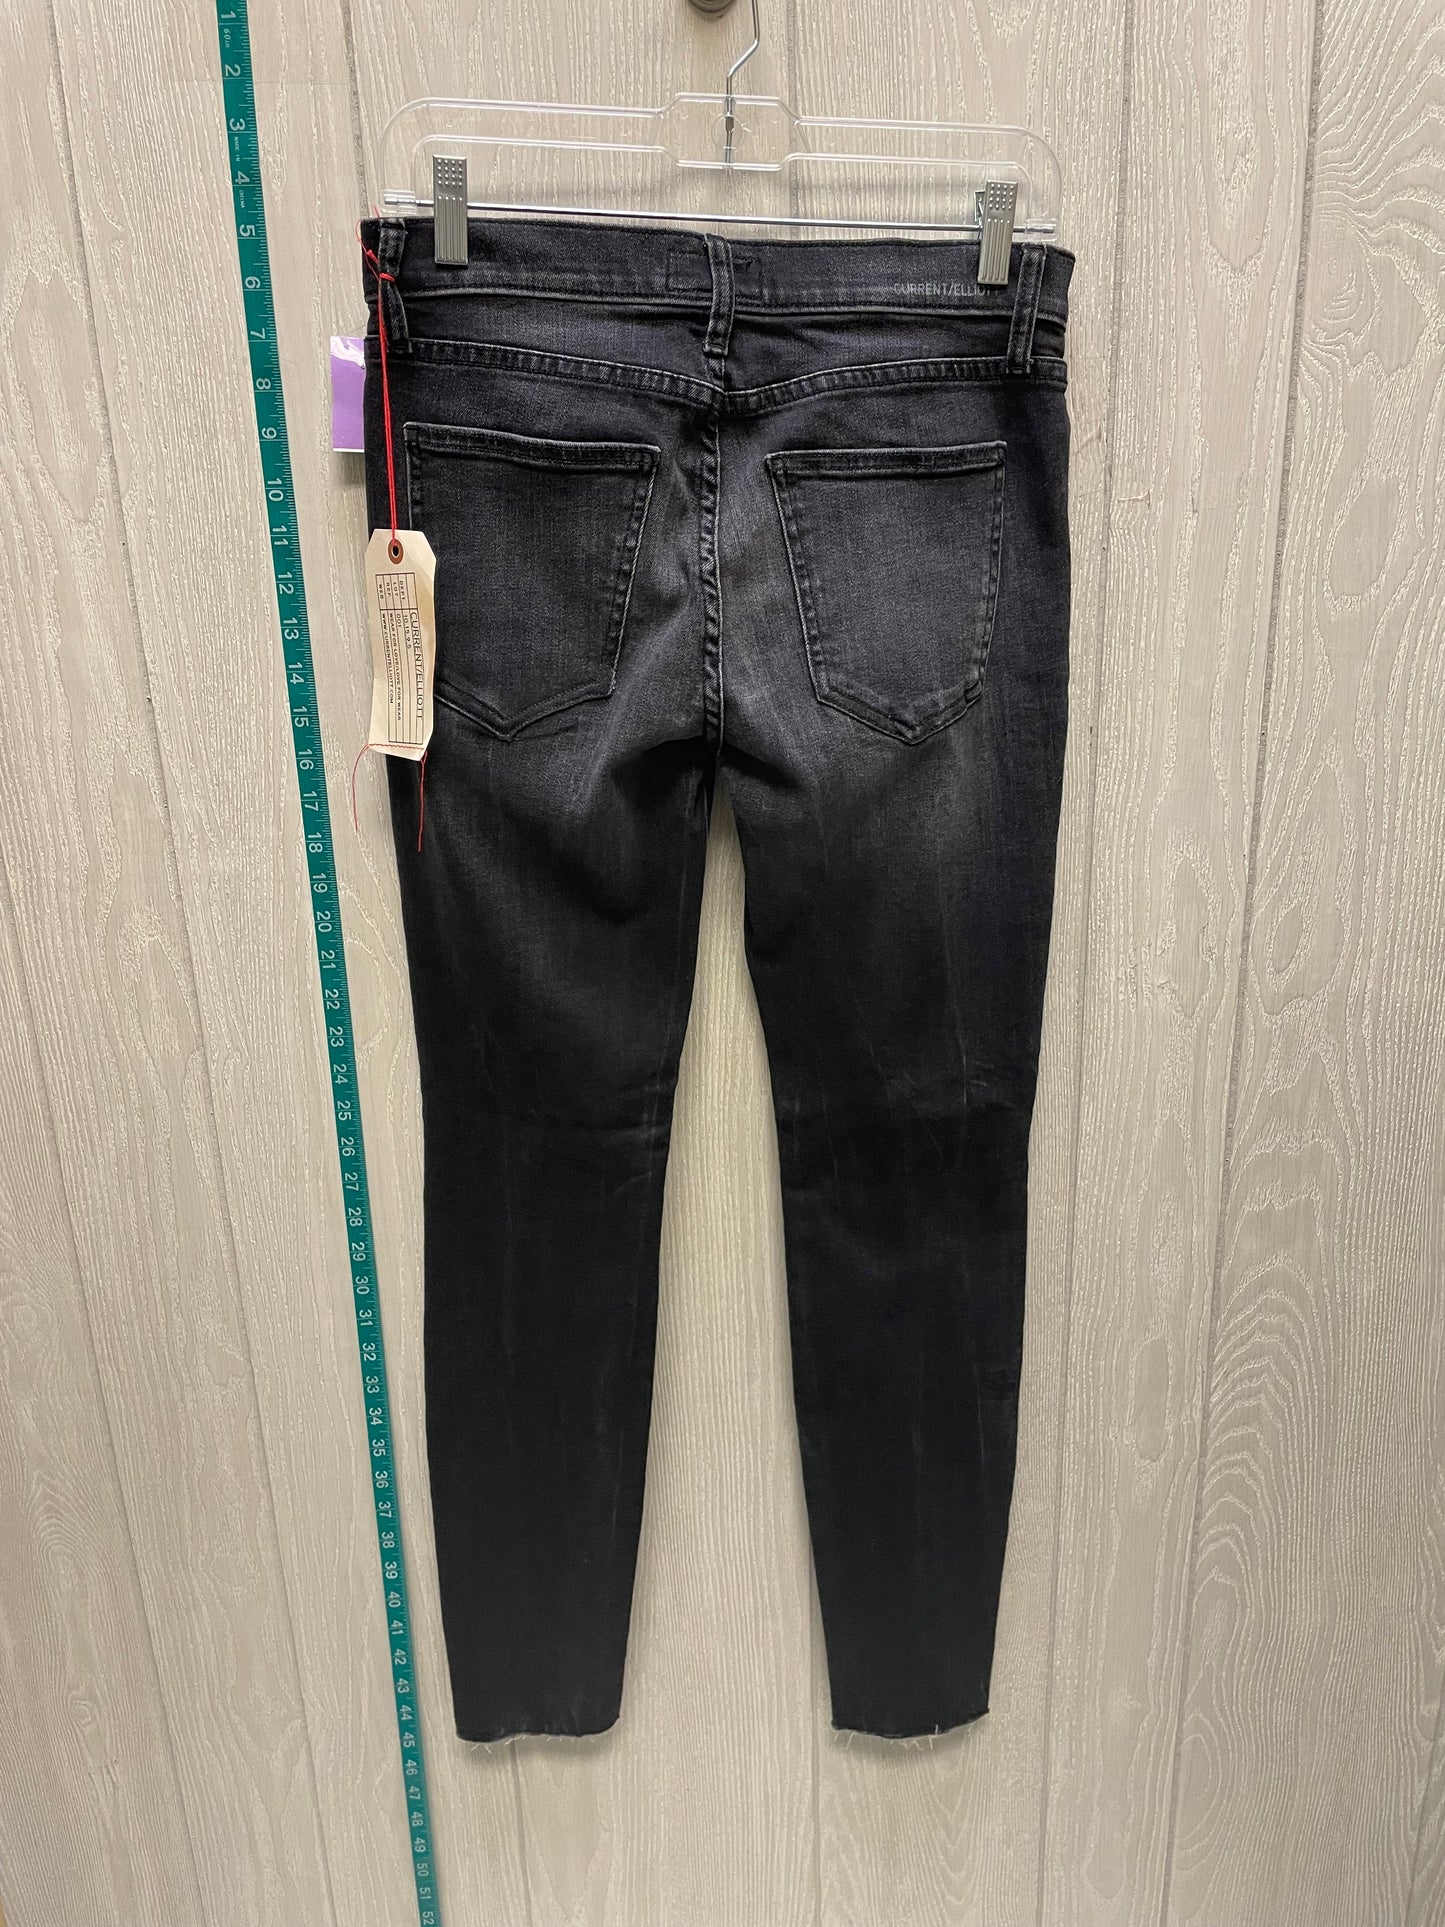 Black Jeans Skinny Current Elliott, Size 4